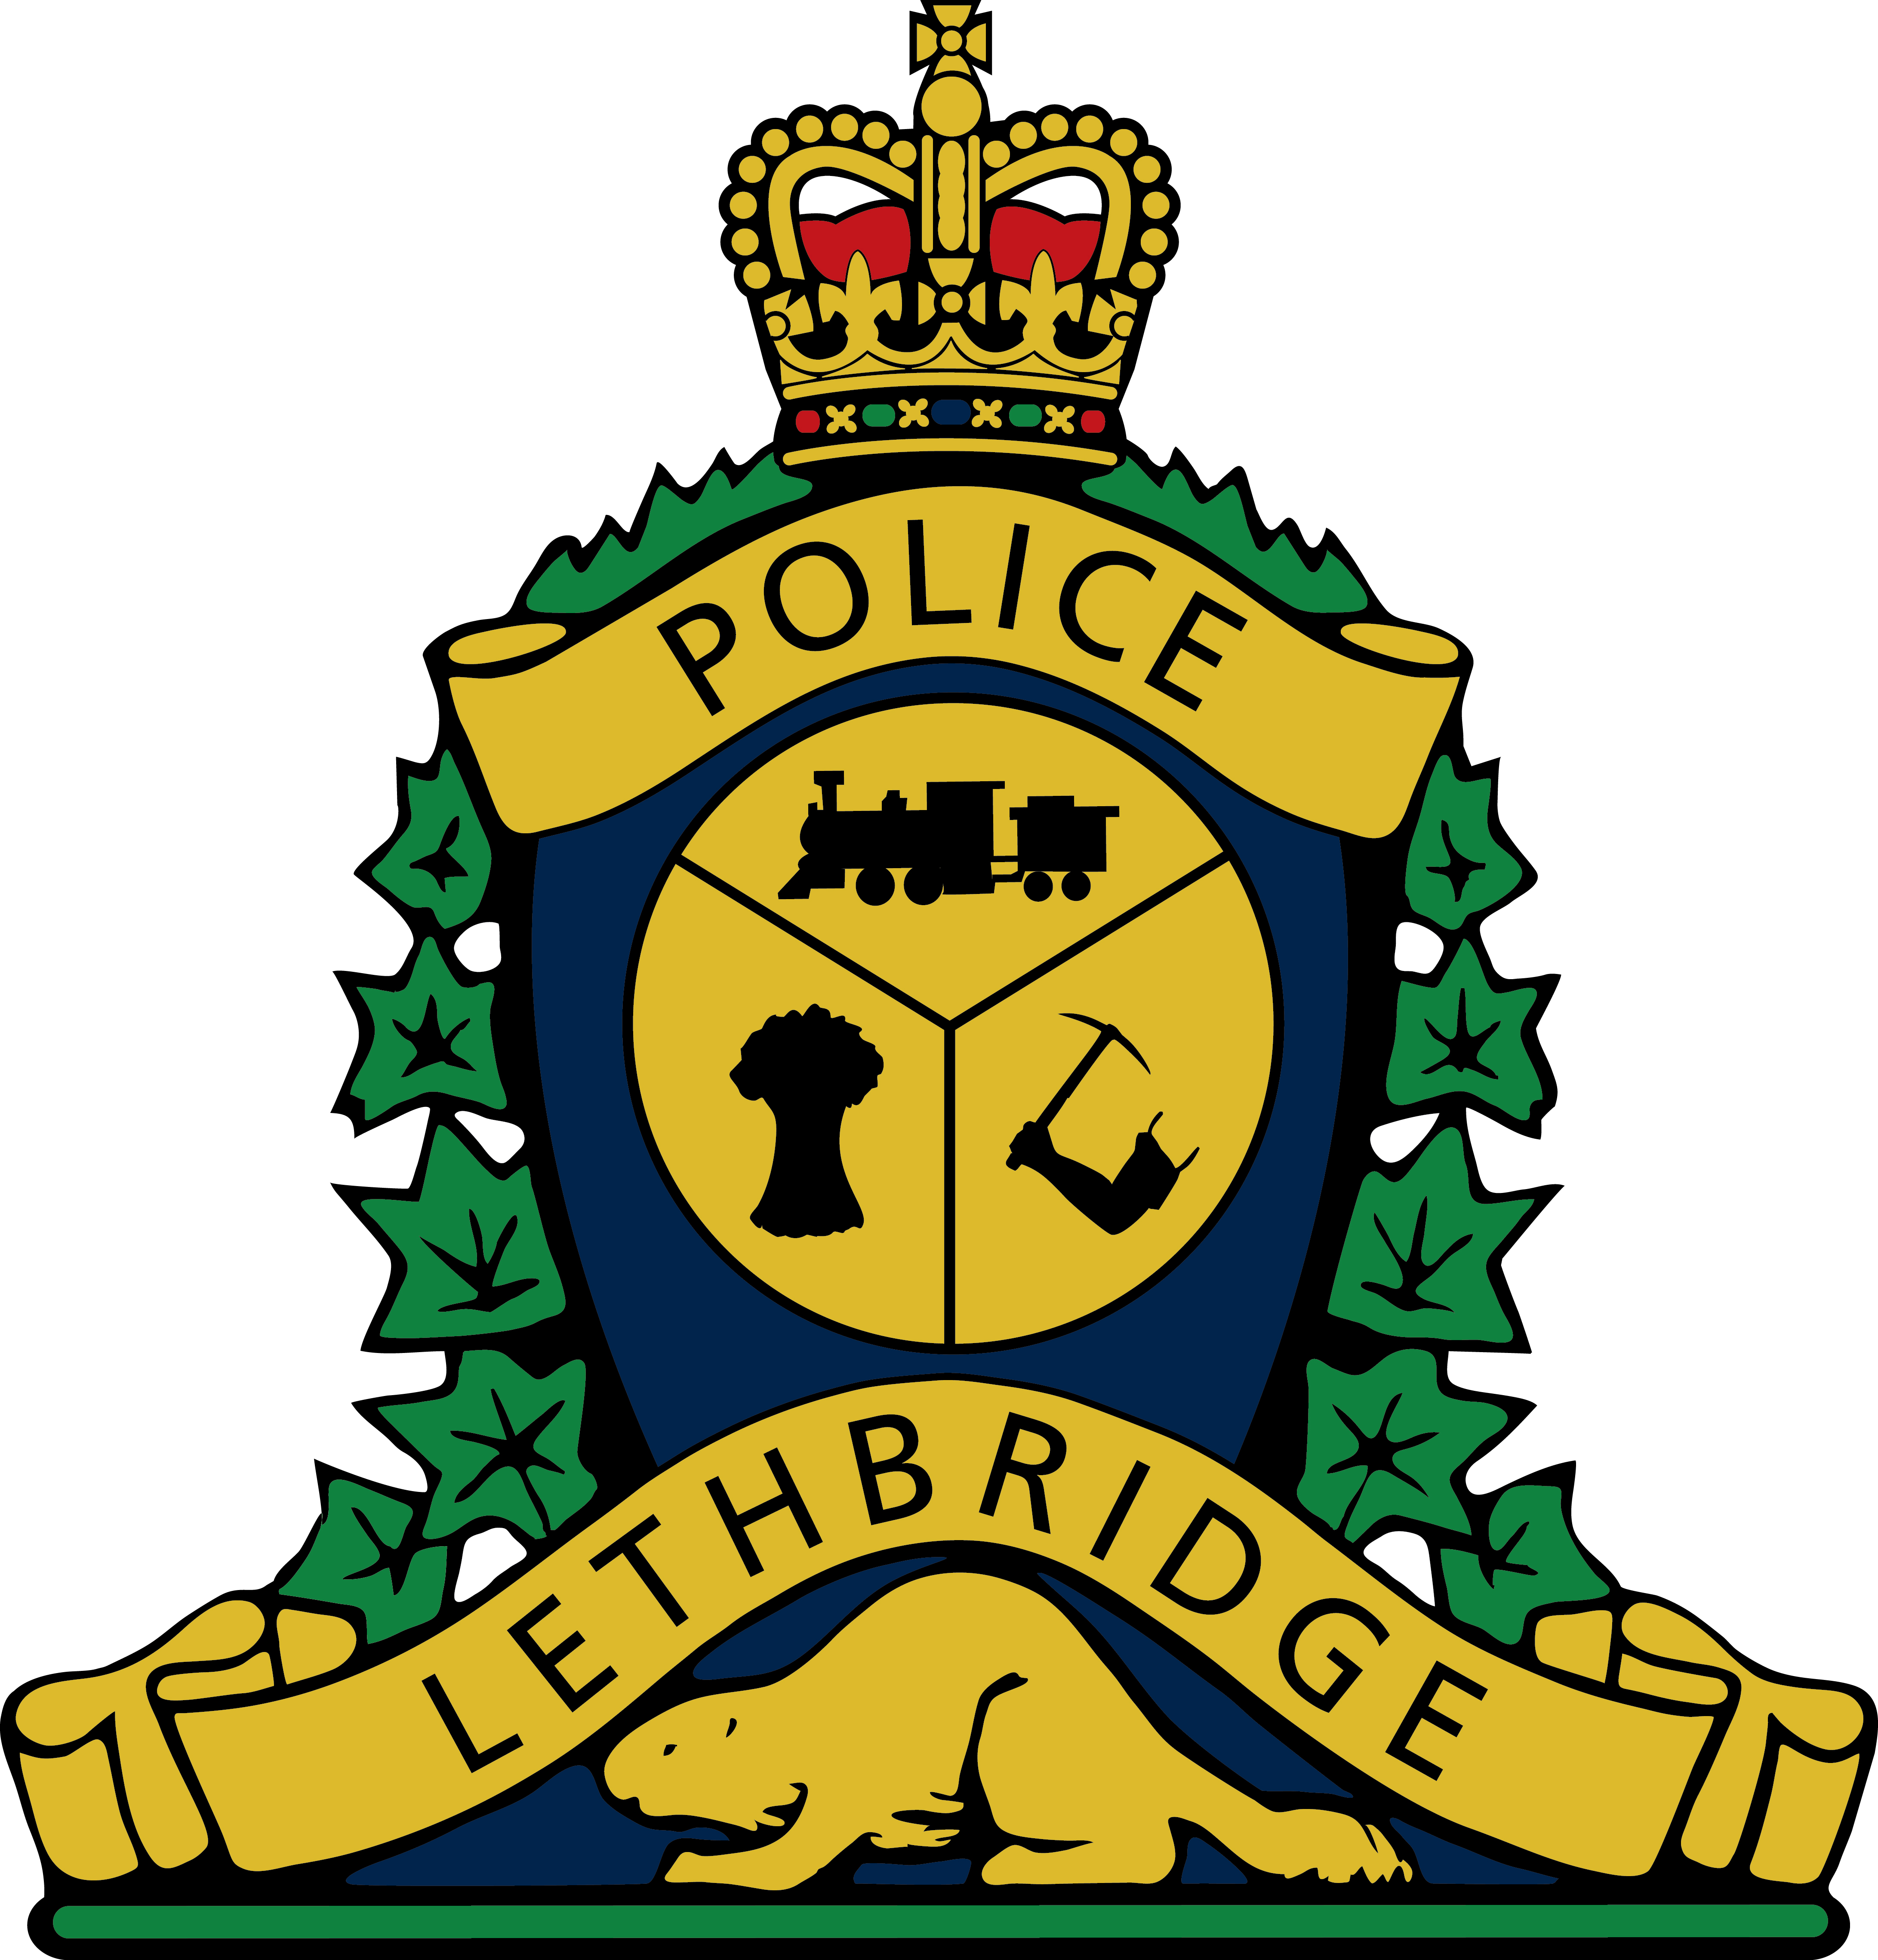 www.lethbridgepolice.ca